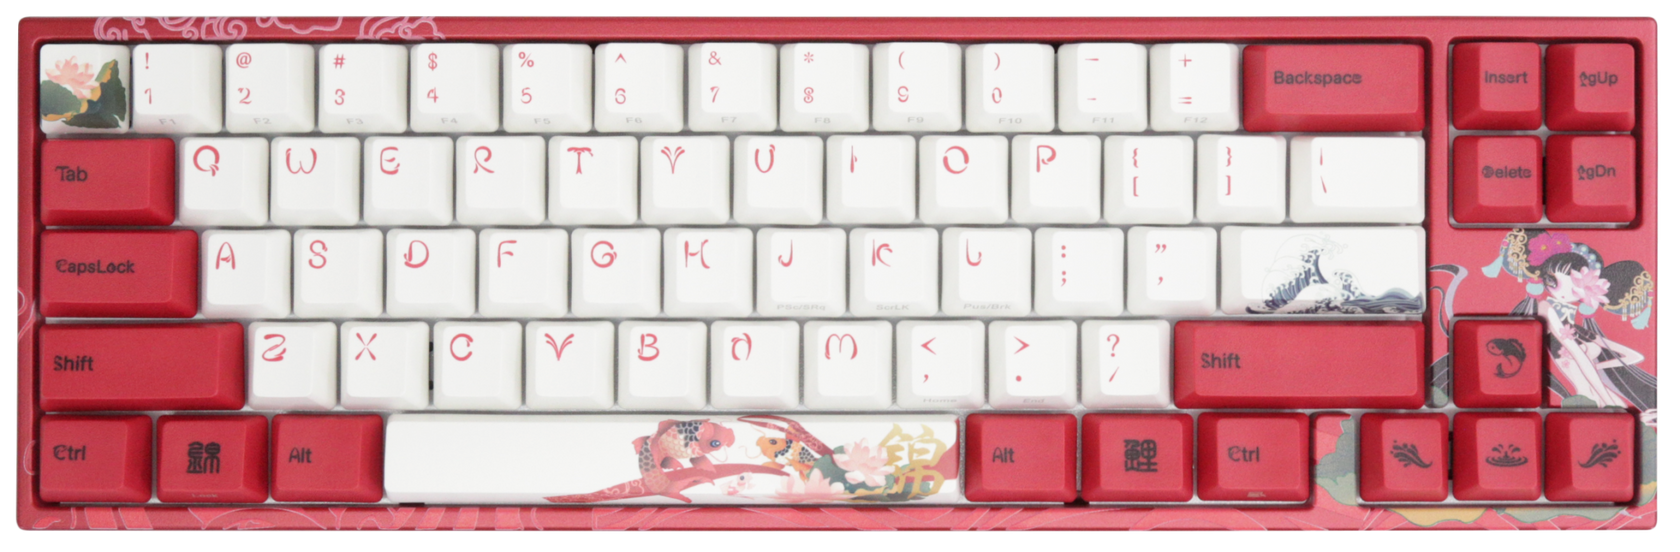 Ducky x Varmilo MIYA Pro Koi Mechanical Keyboard